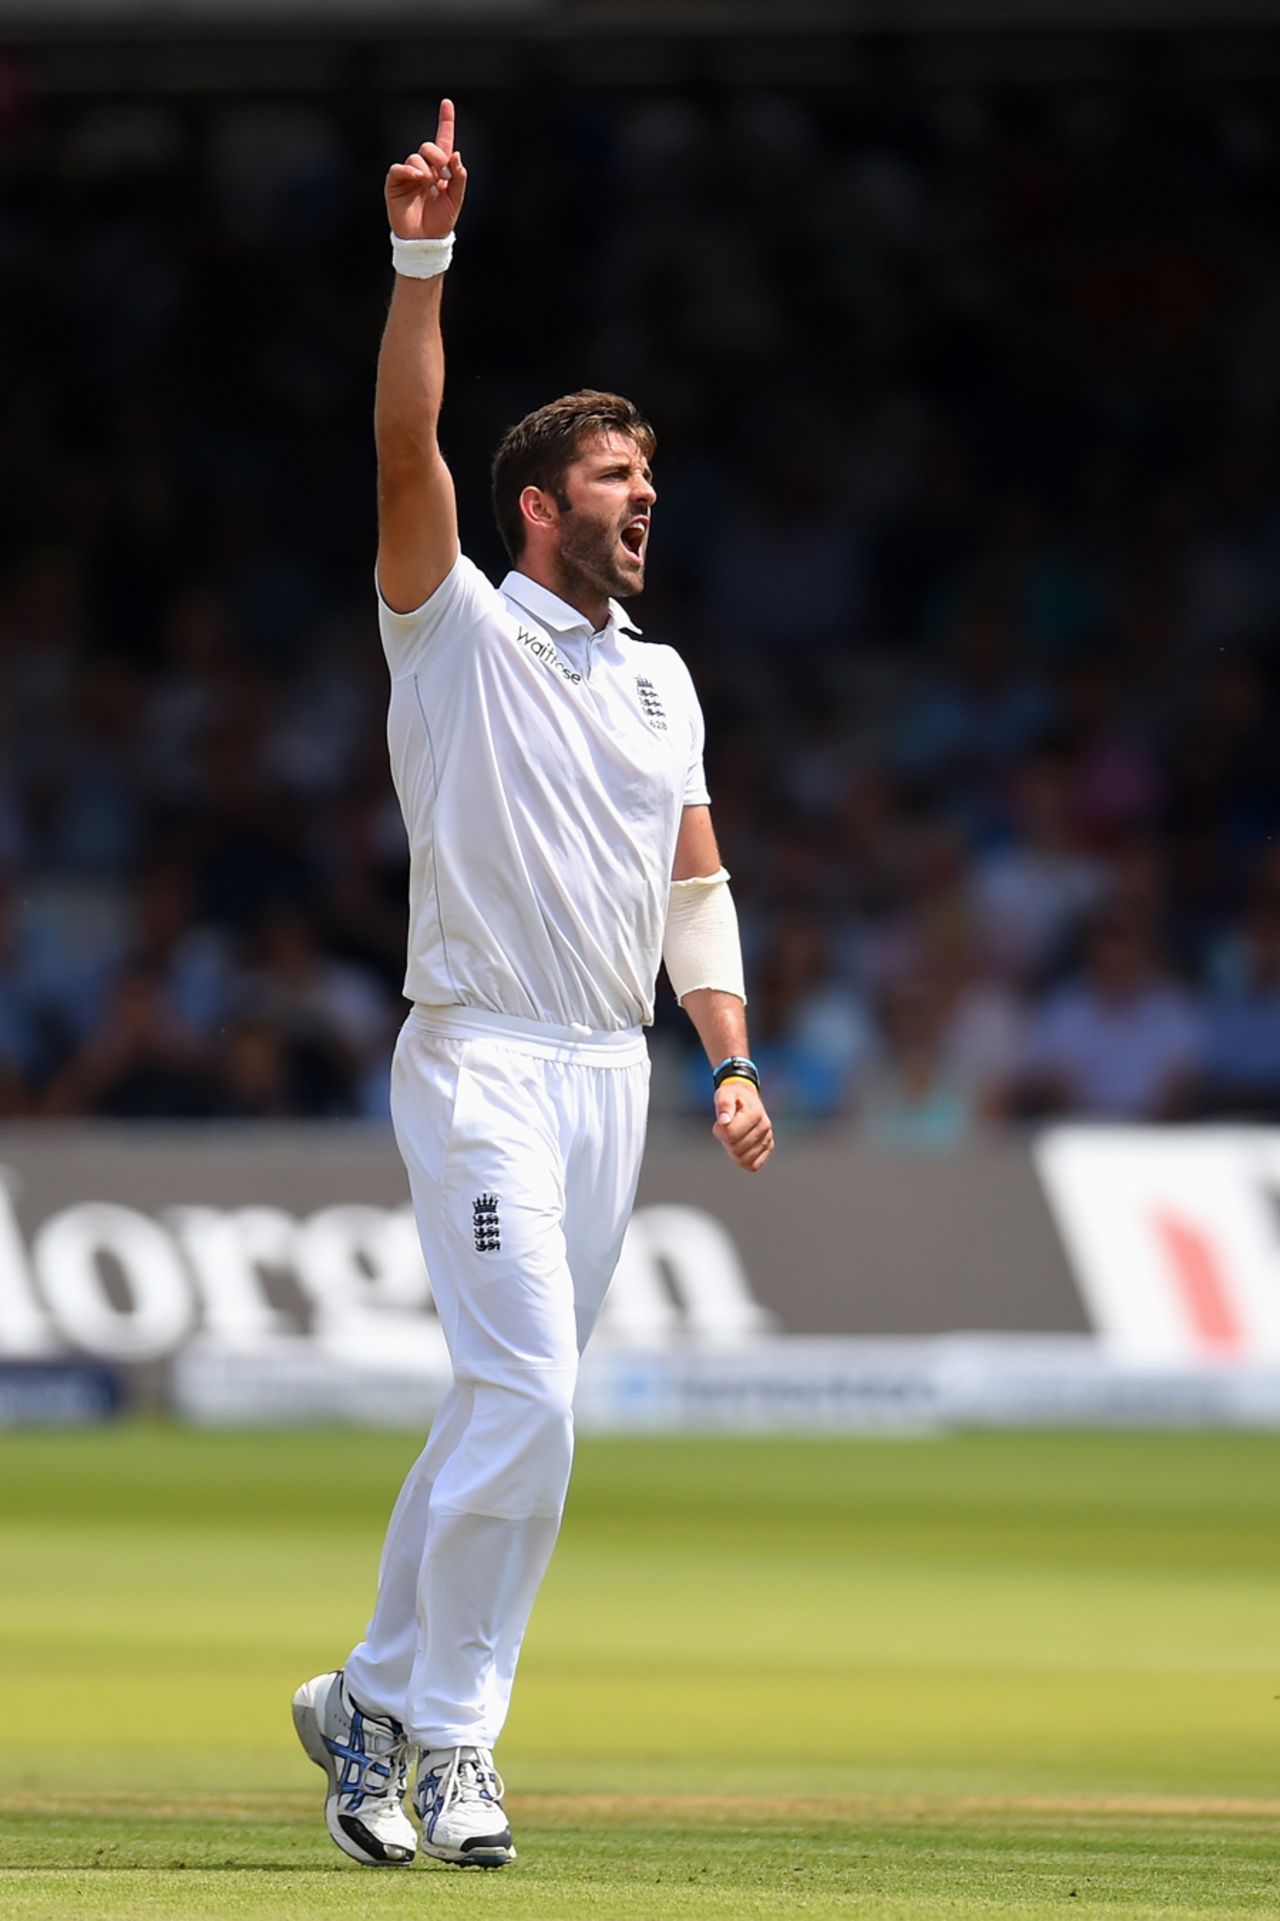 Liam Plunkett celebrates dismissing M Vijay, England v India, 2nd Investec Test, Lord's, 1st day, July 17, 2014